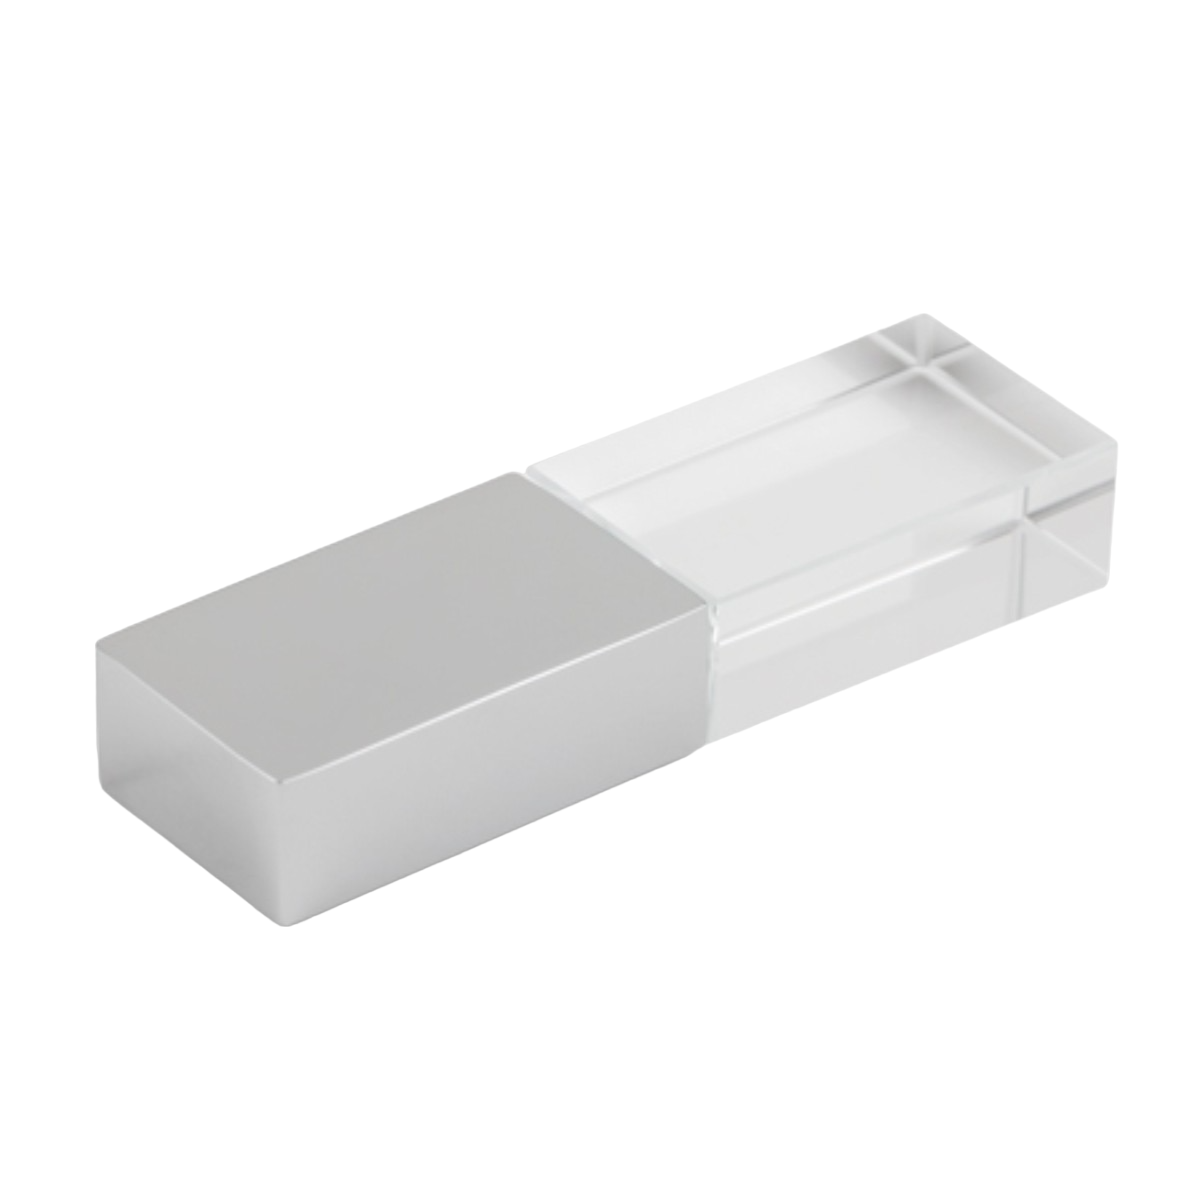 USB флешка модель 310 Matt, цвет серебро, объем памяти 8 GB